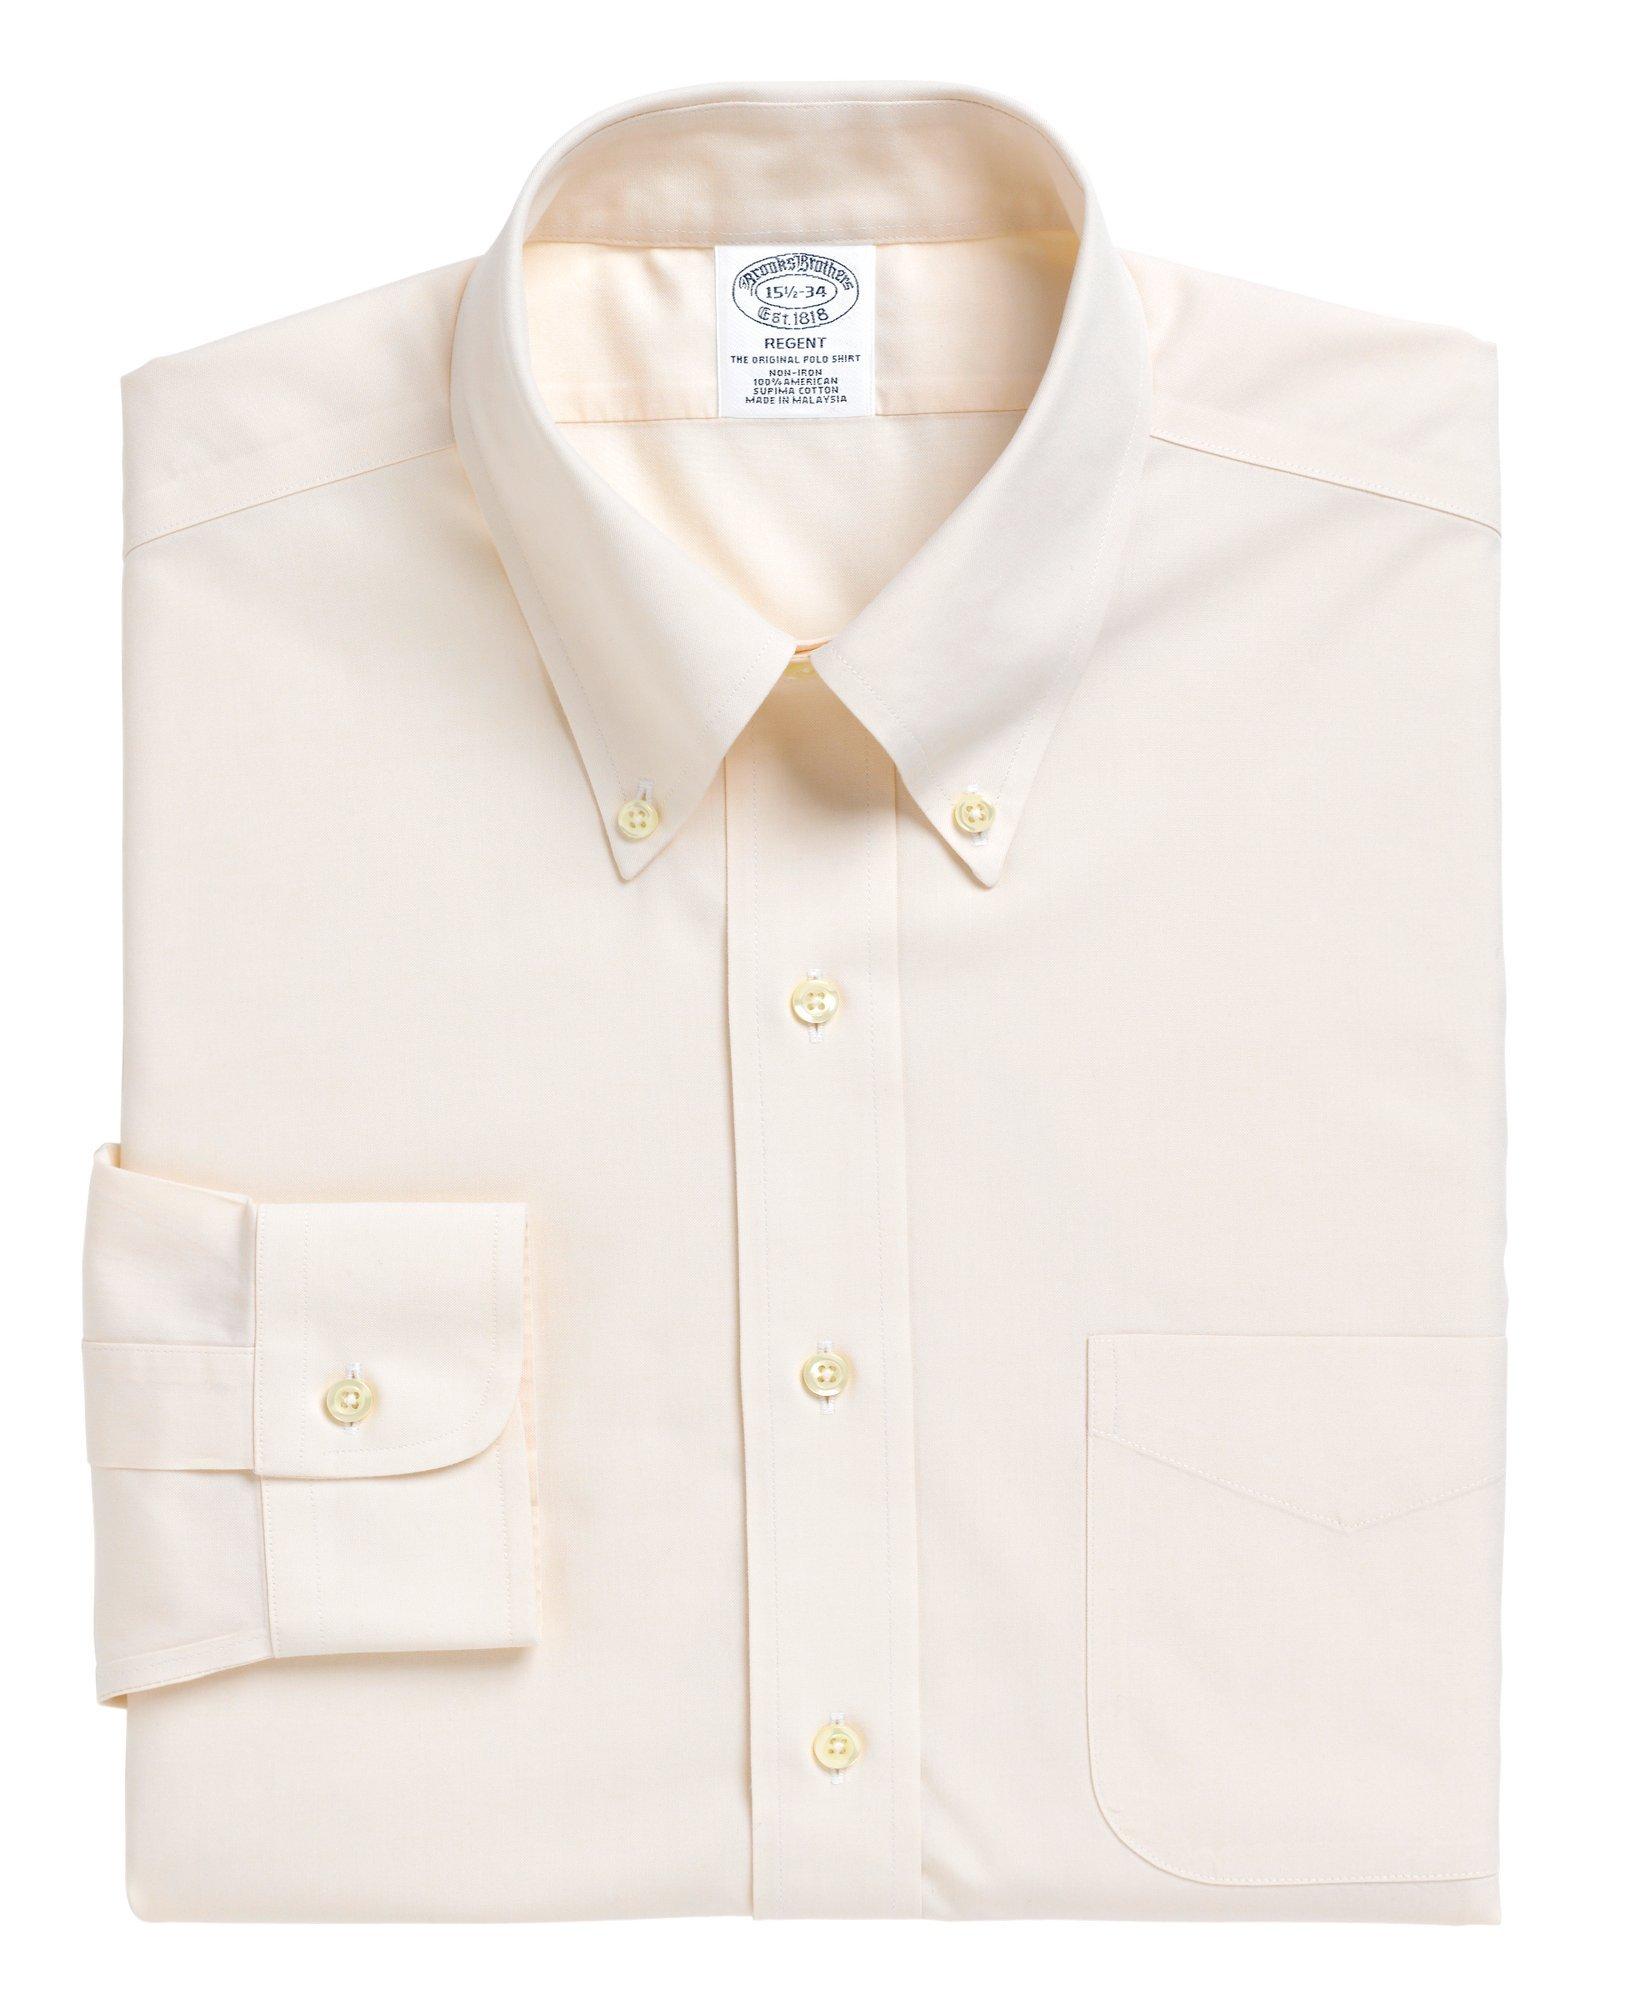 Striped Monogram Pocket T-Shirt Dress - Men - OBSOLETES DO NOT